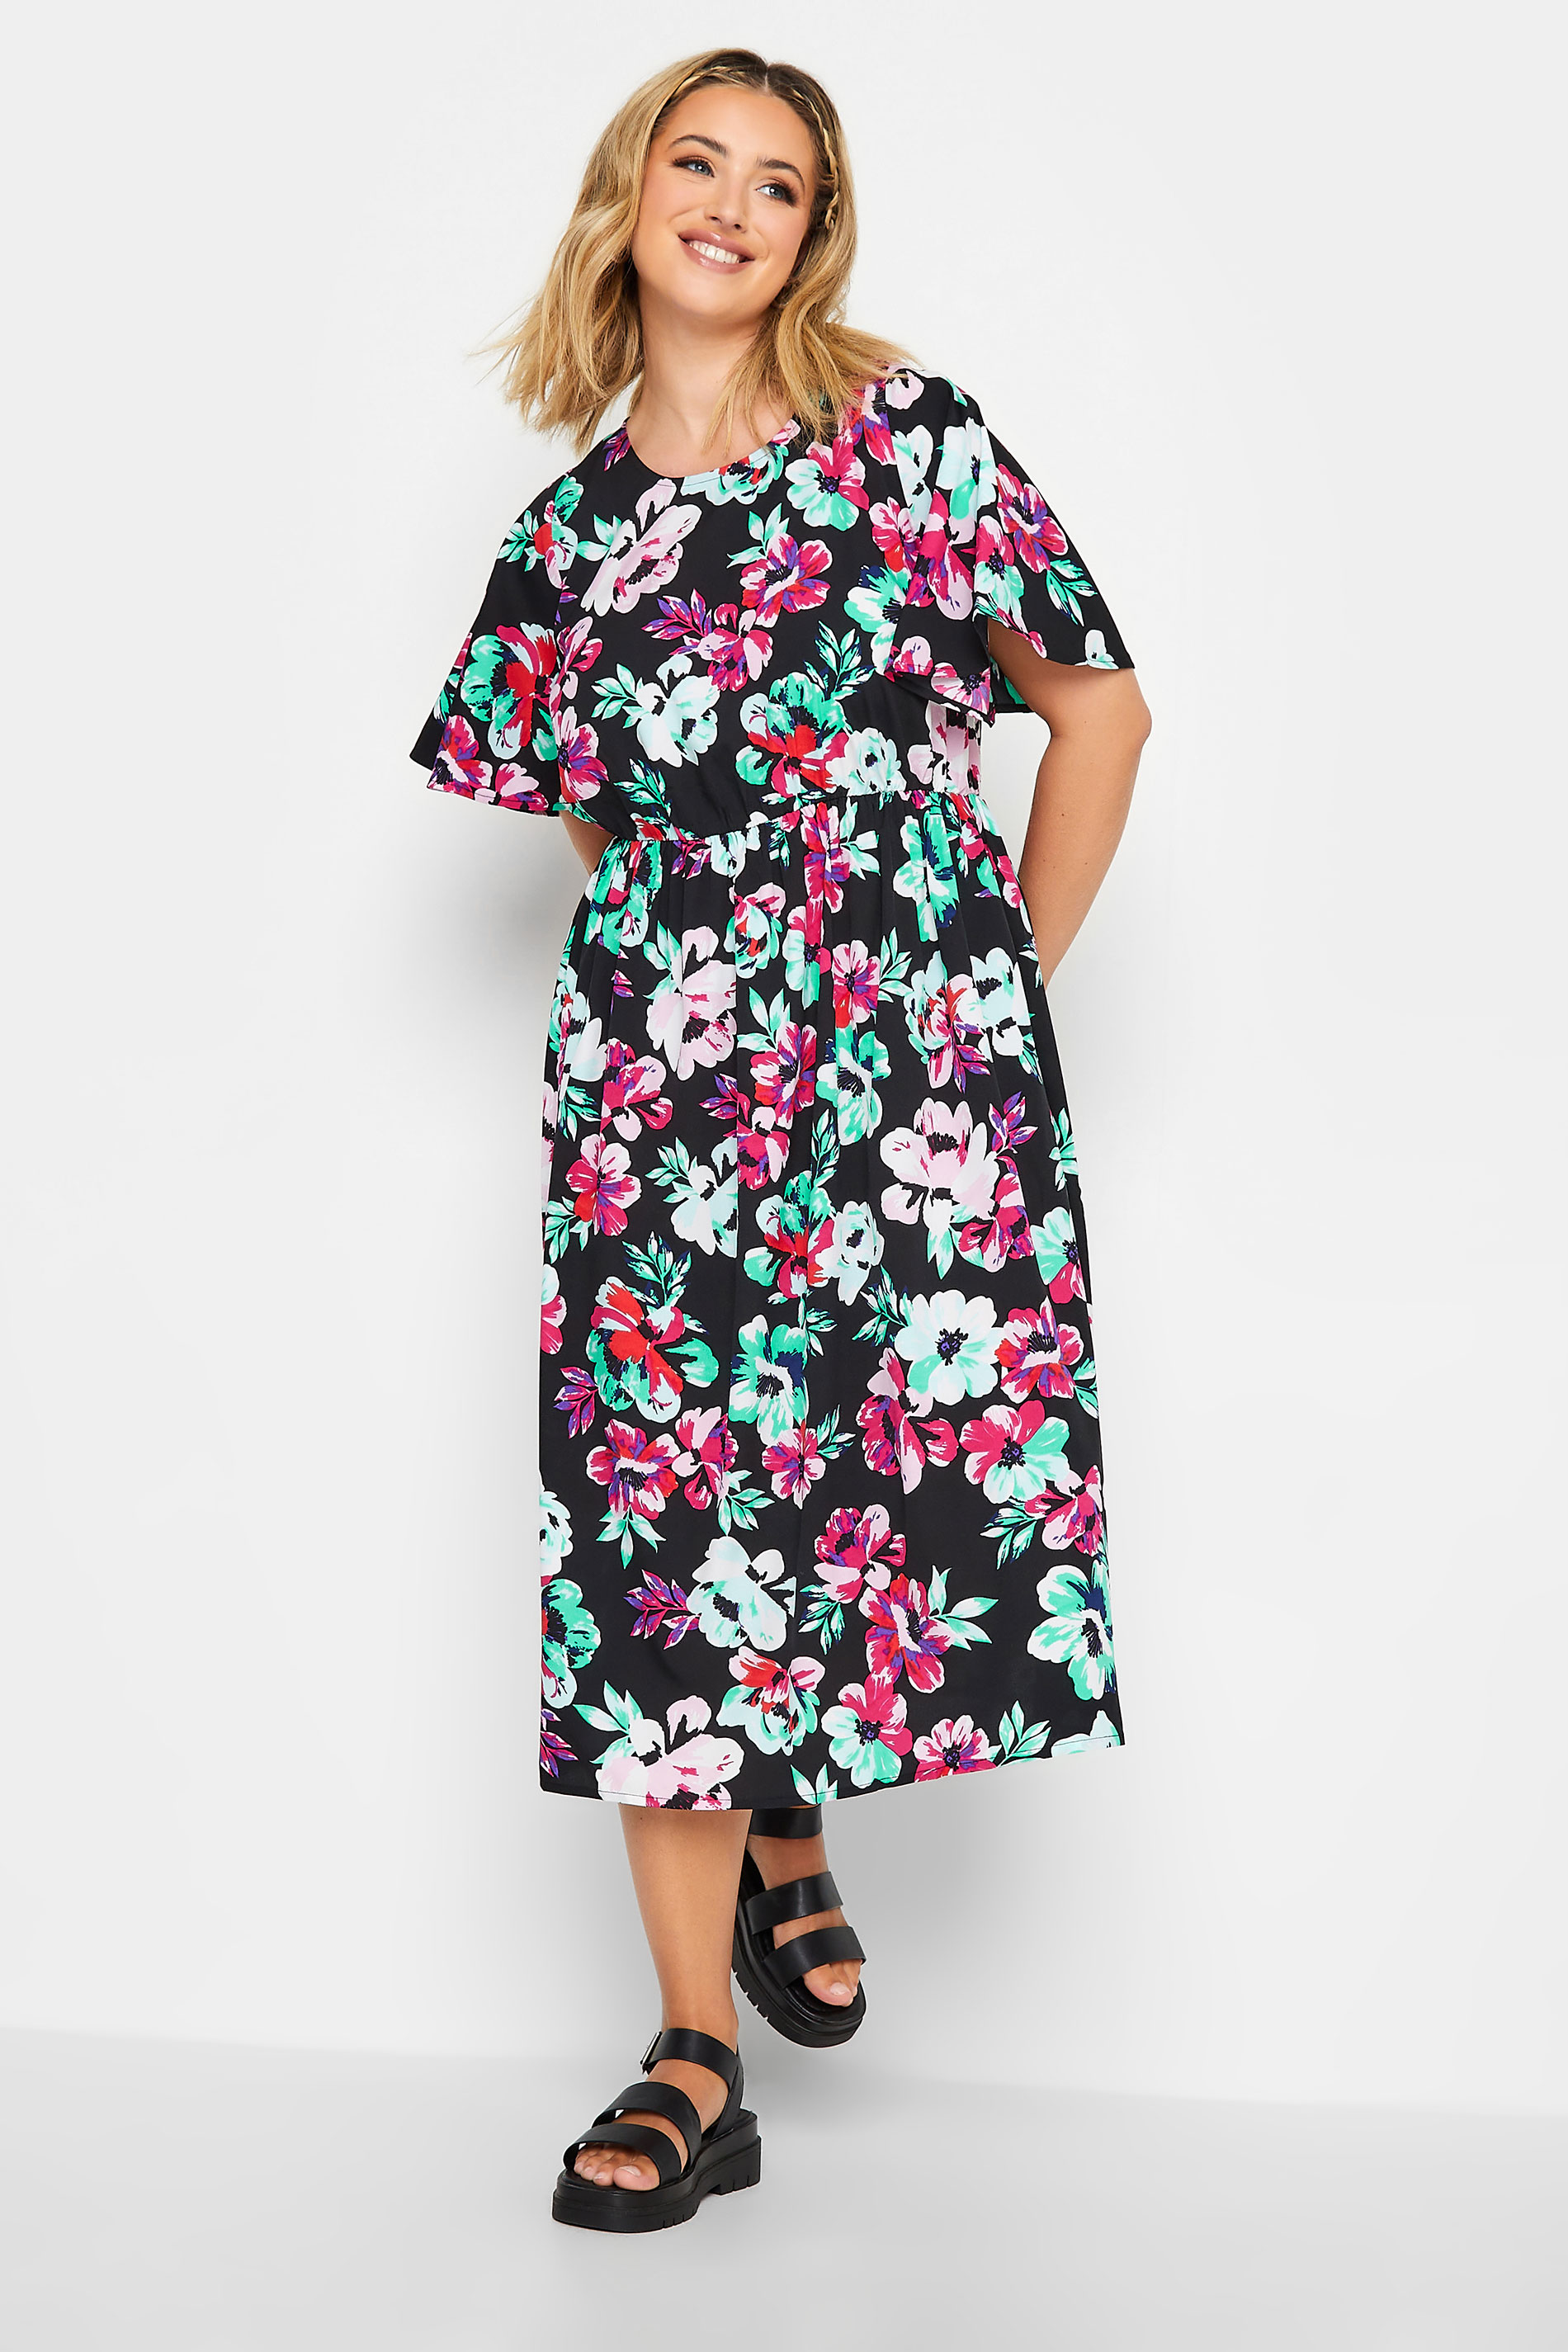 YOURS Plus Size Black Floral Print Midi Tea Dress | Yours Clothing 1